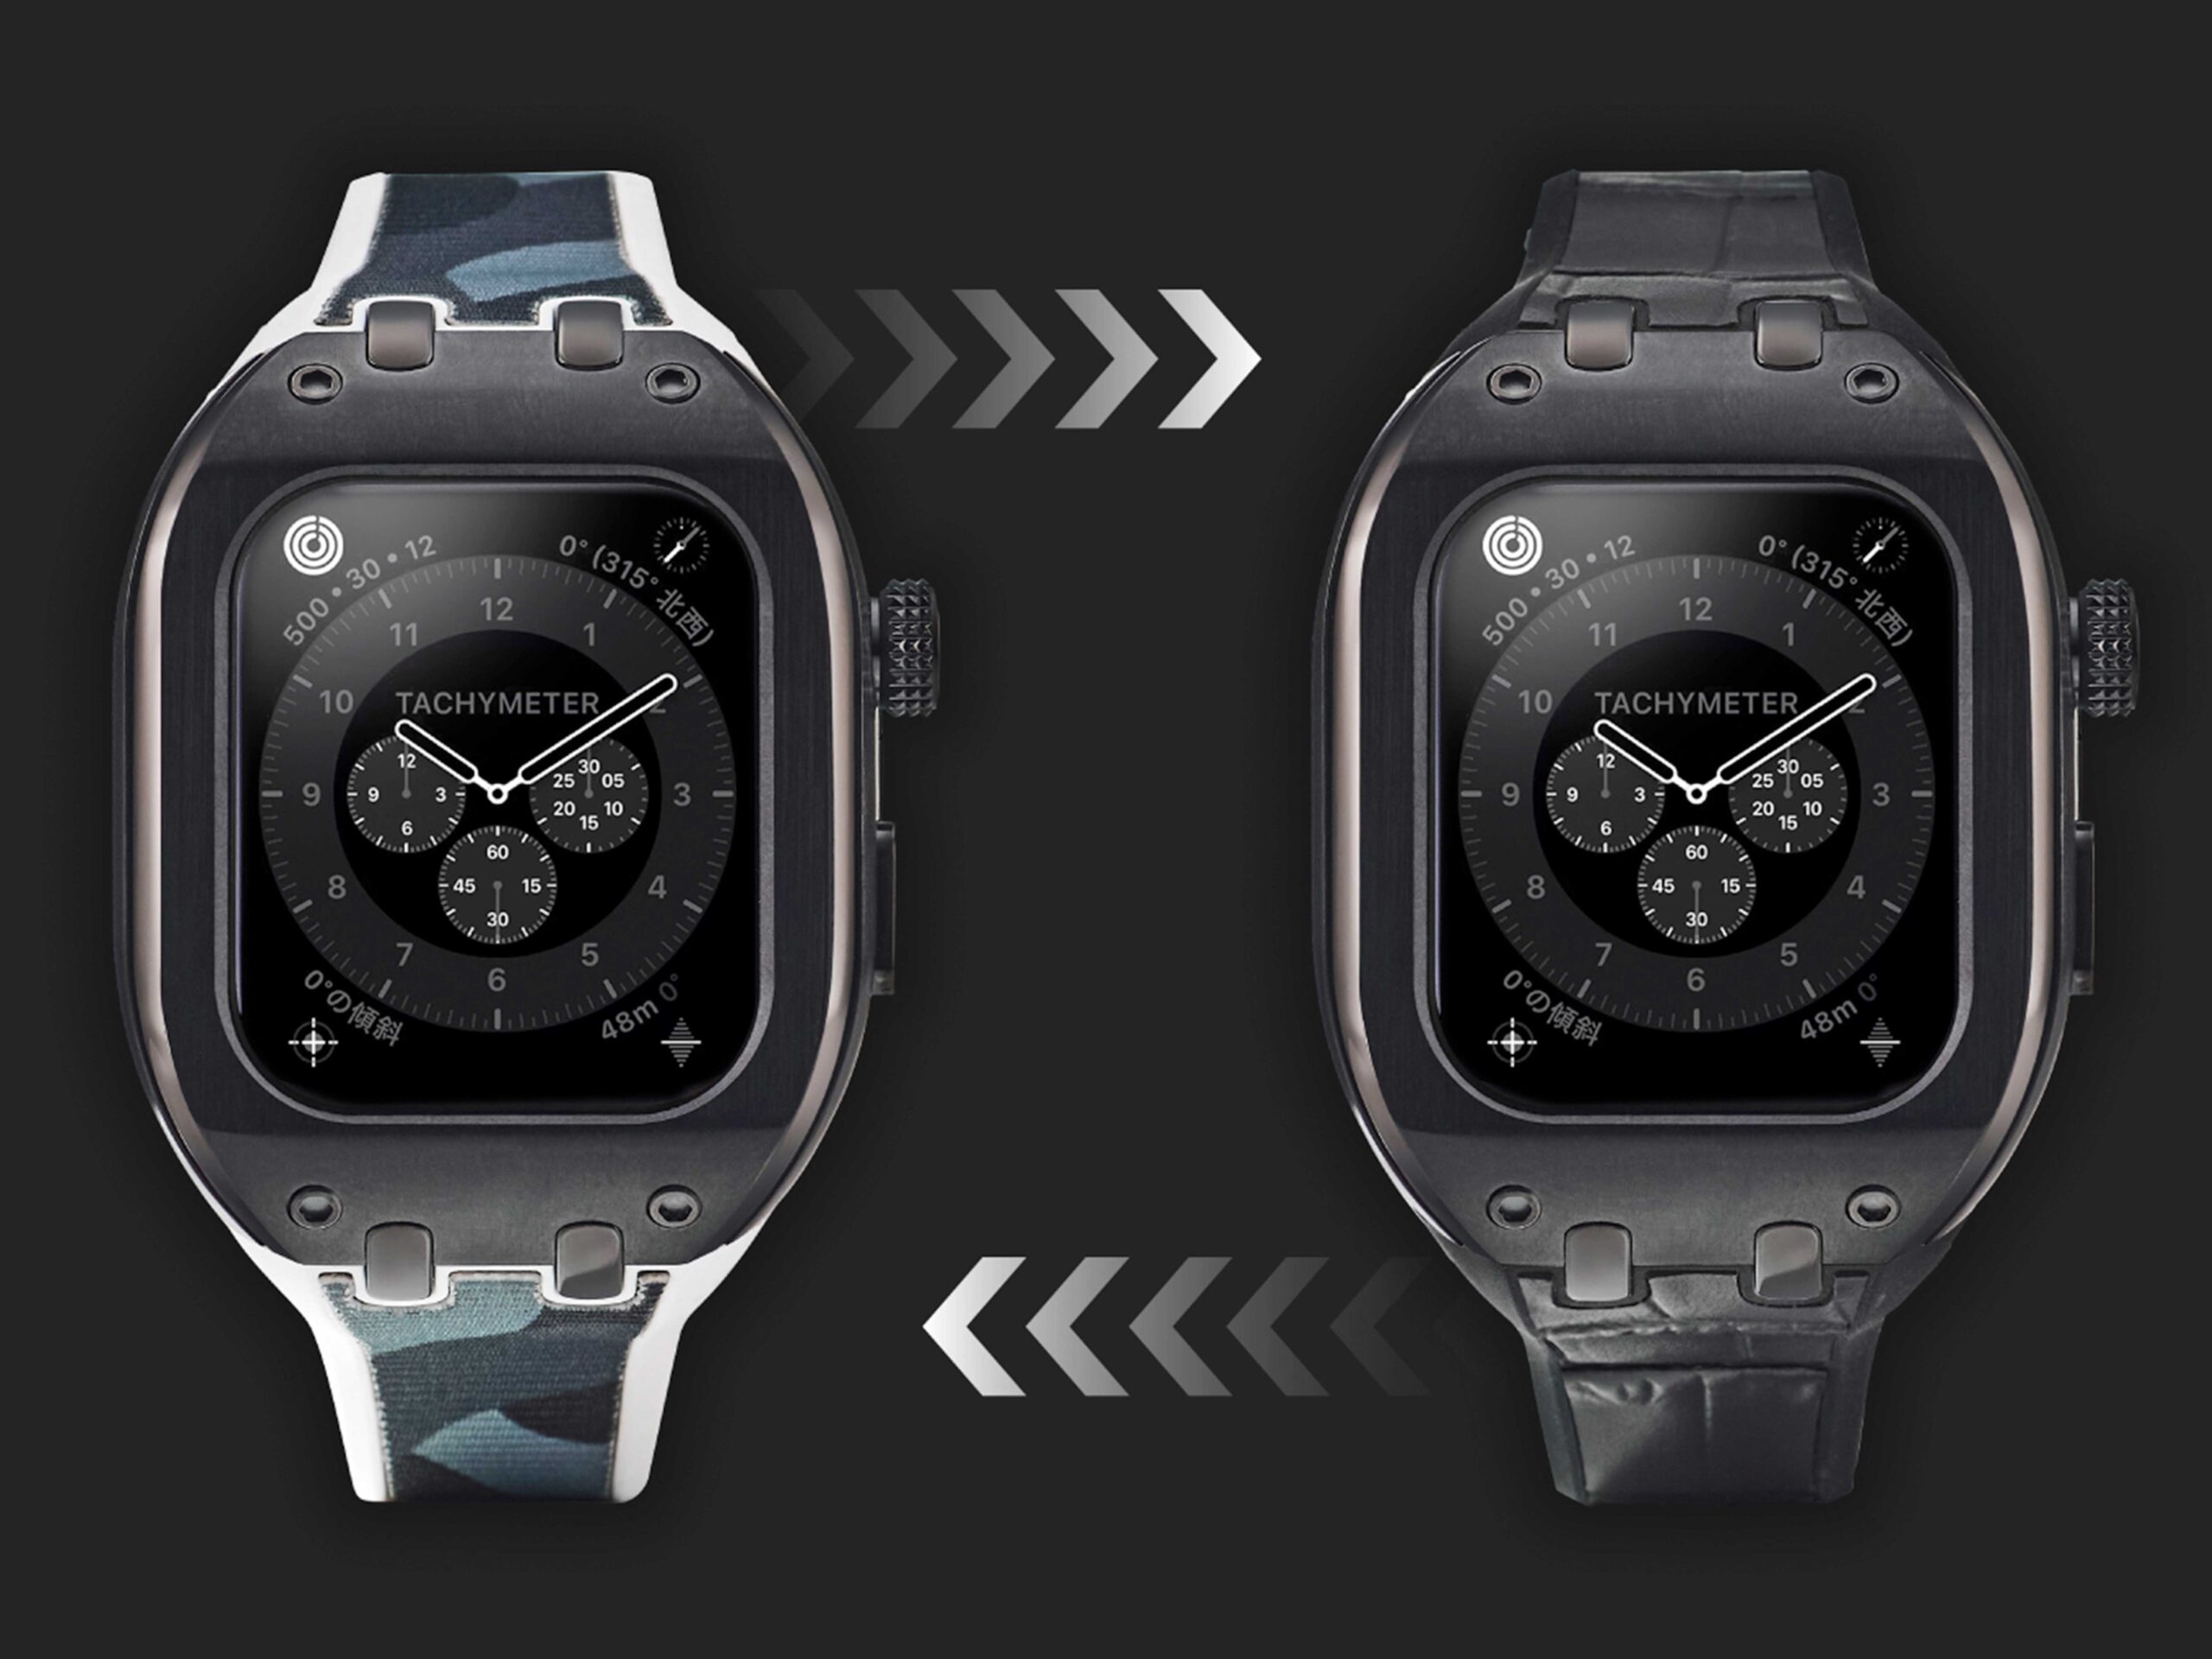 Apple Watch ケース 9/8/7対応 - ALUMINIUM WBB0289-010 41mmスペアストラップ付属-SPORT